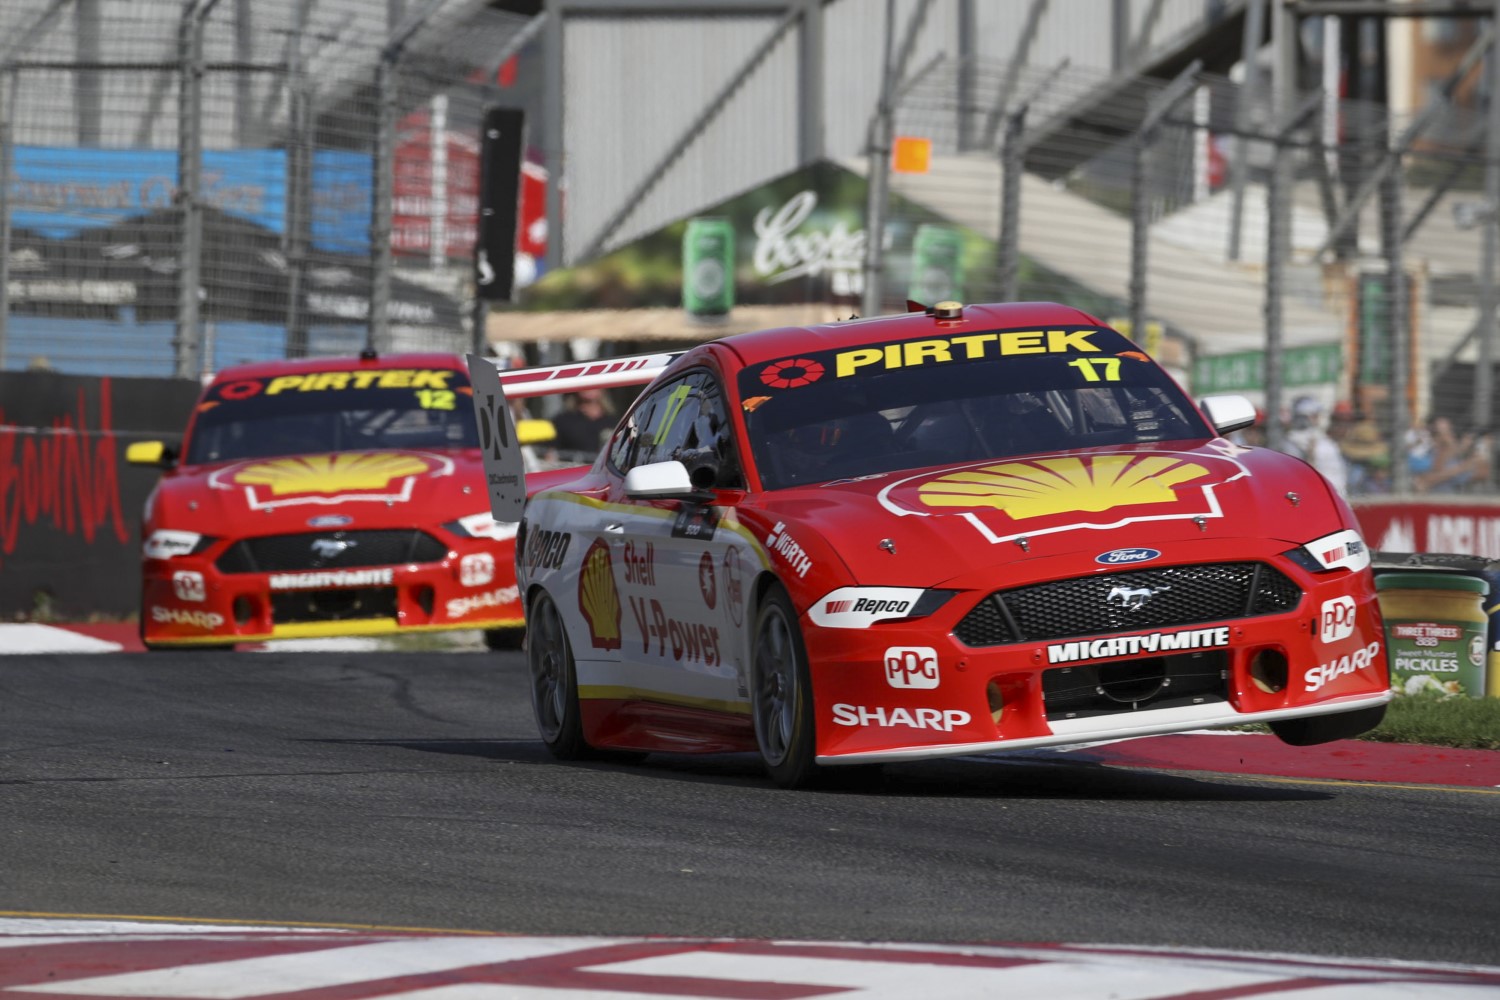 Penske's Ford Mustangs are running roughshod over the Australian Supercar field